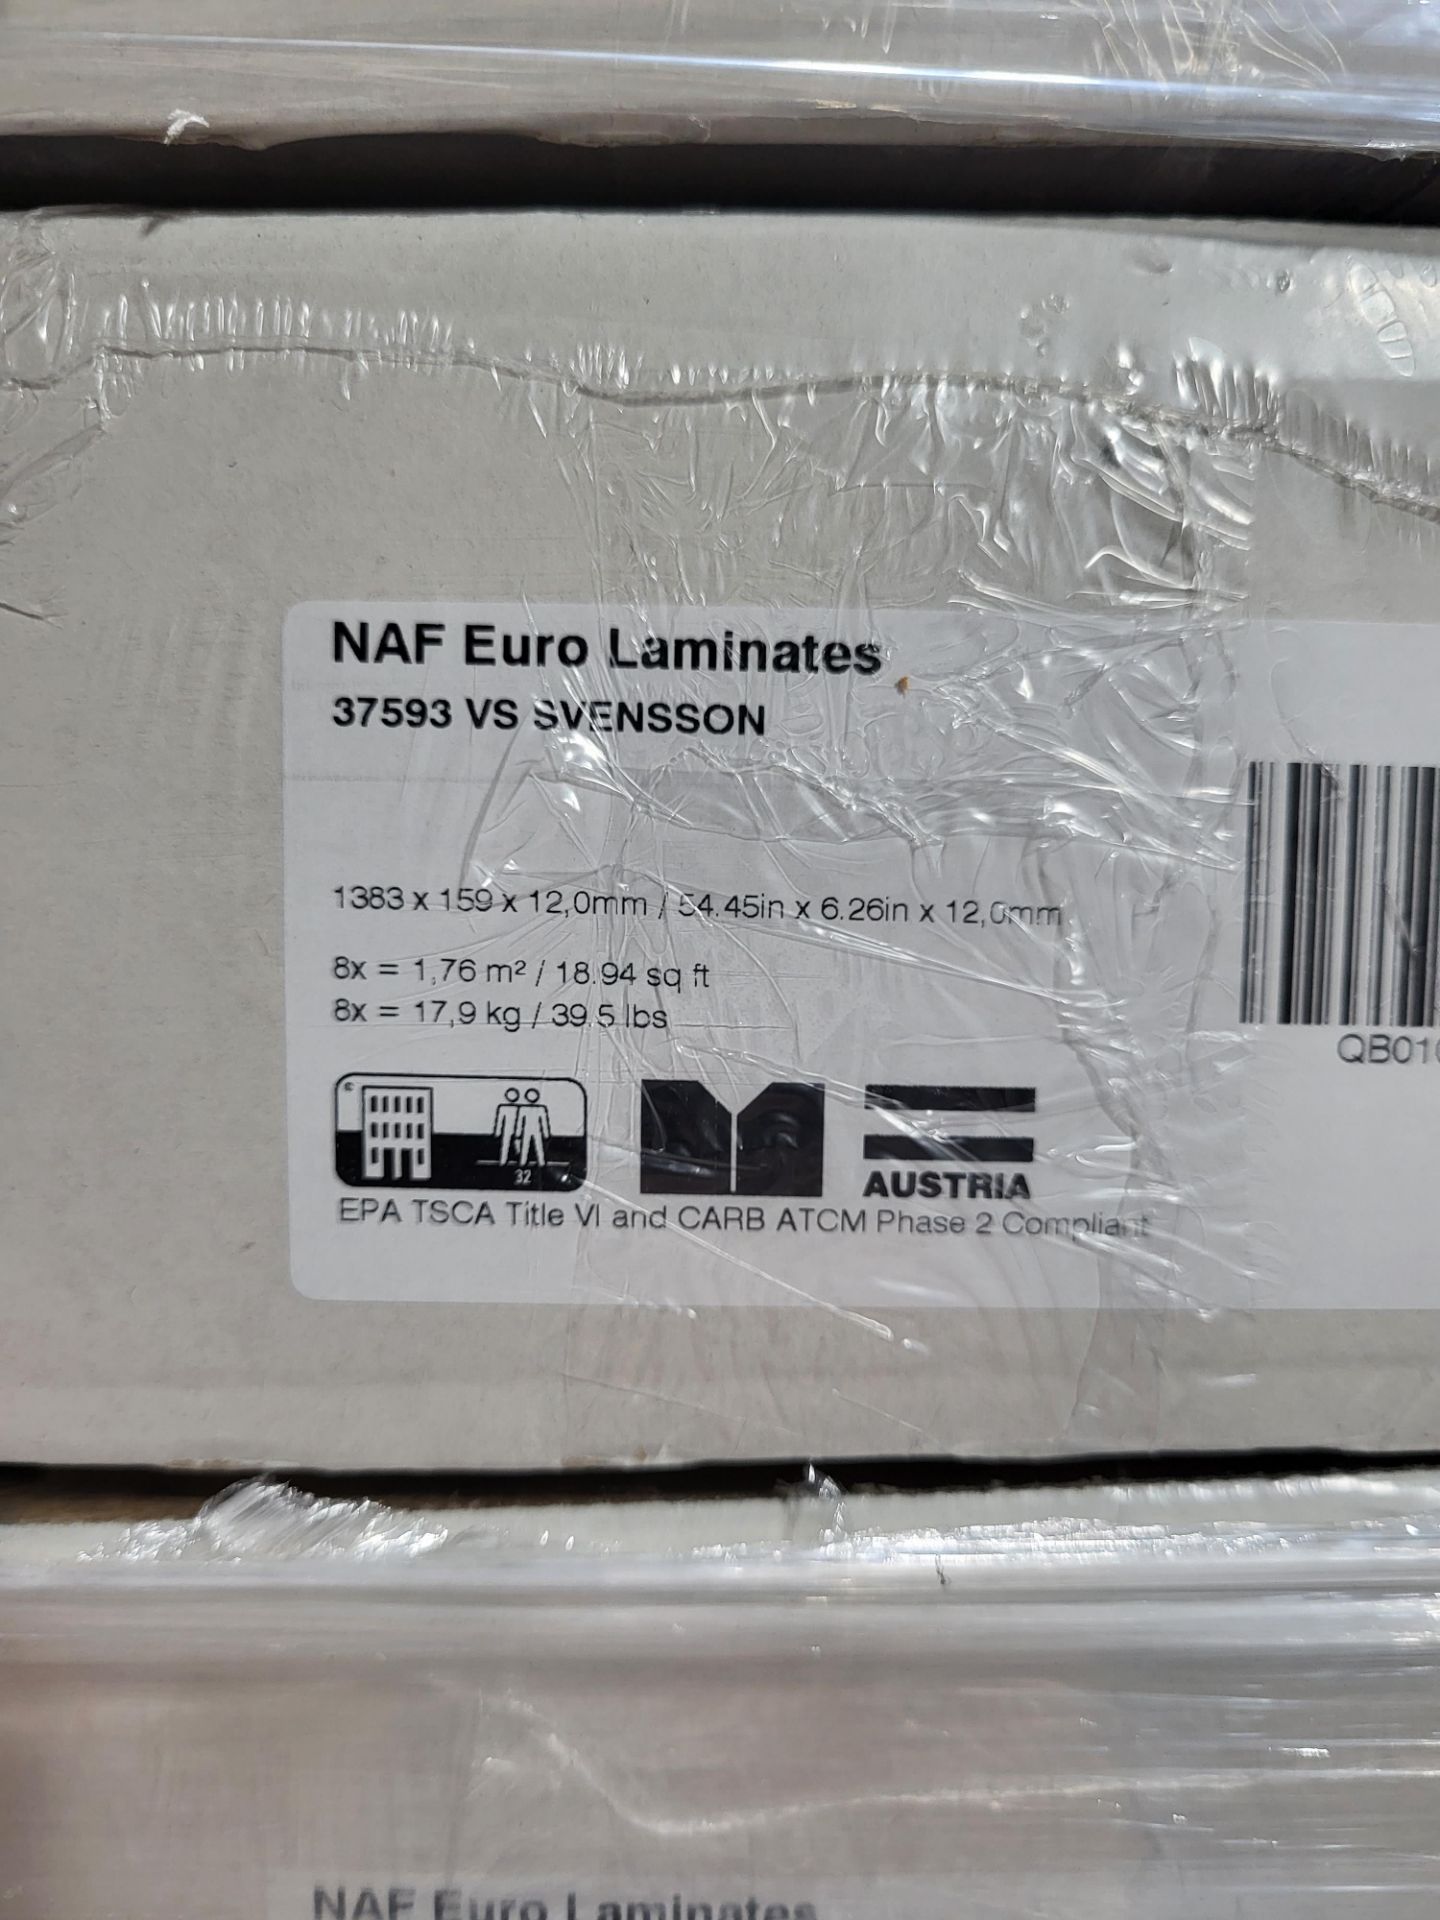 BOXES - NAF EURO SVENSSON GREY 1363 X 159 X 12MM LAMINATE FLOORING (18.94 SQFT / BOX) - Image 2 of 4